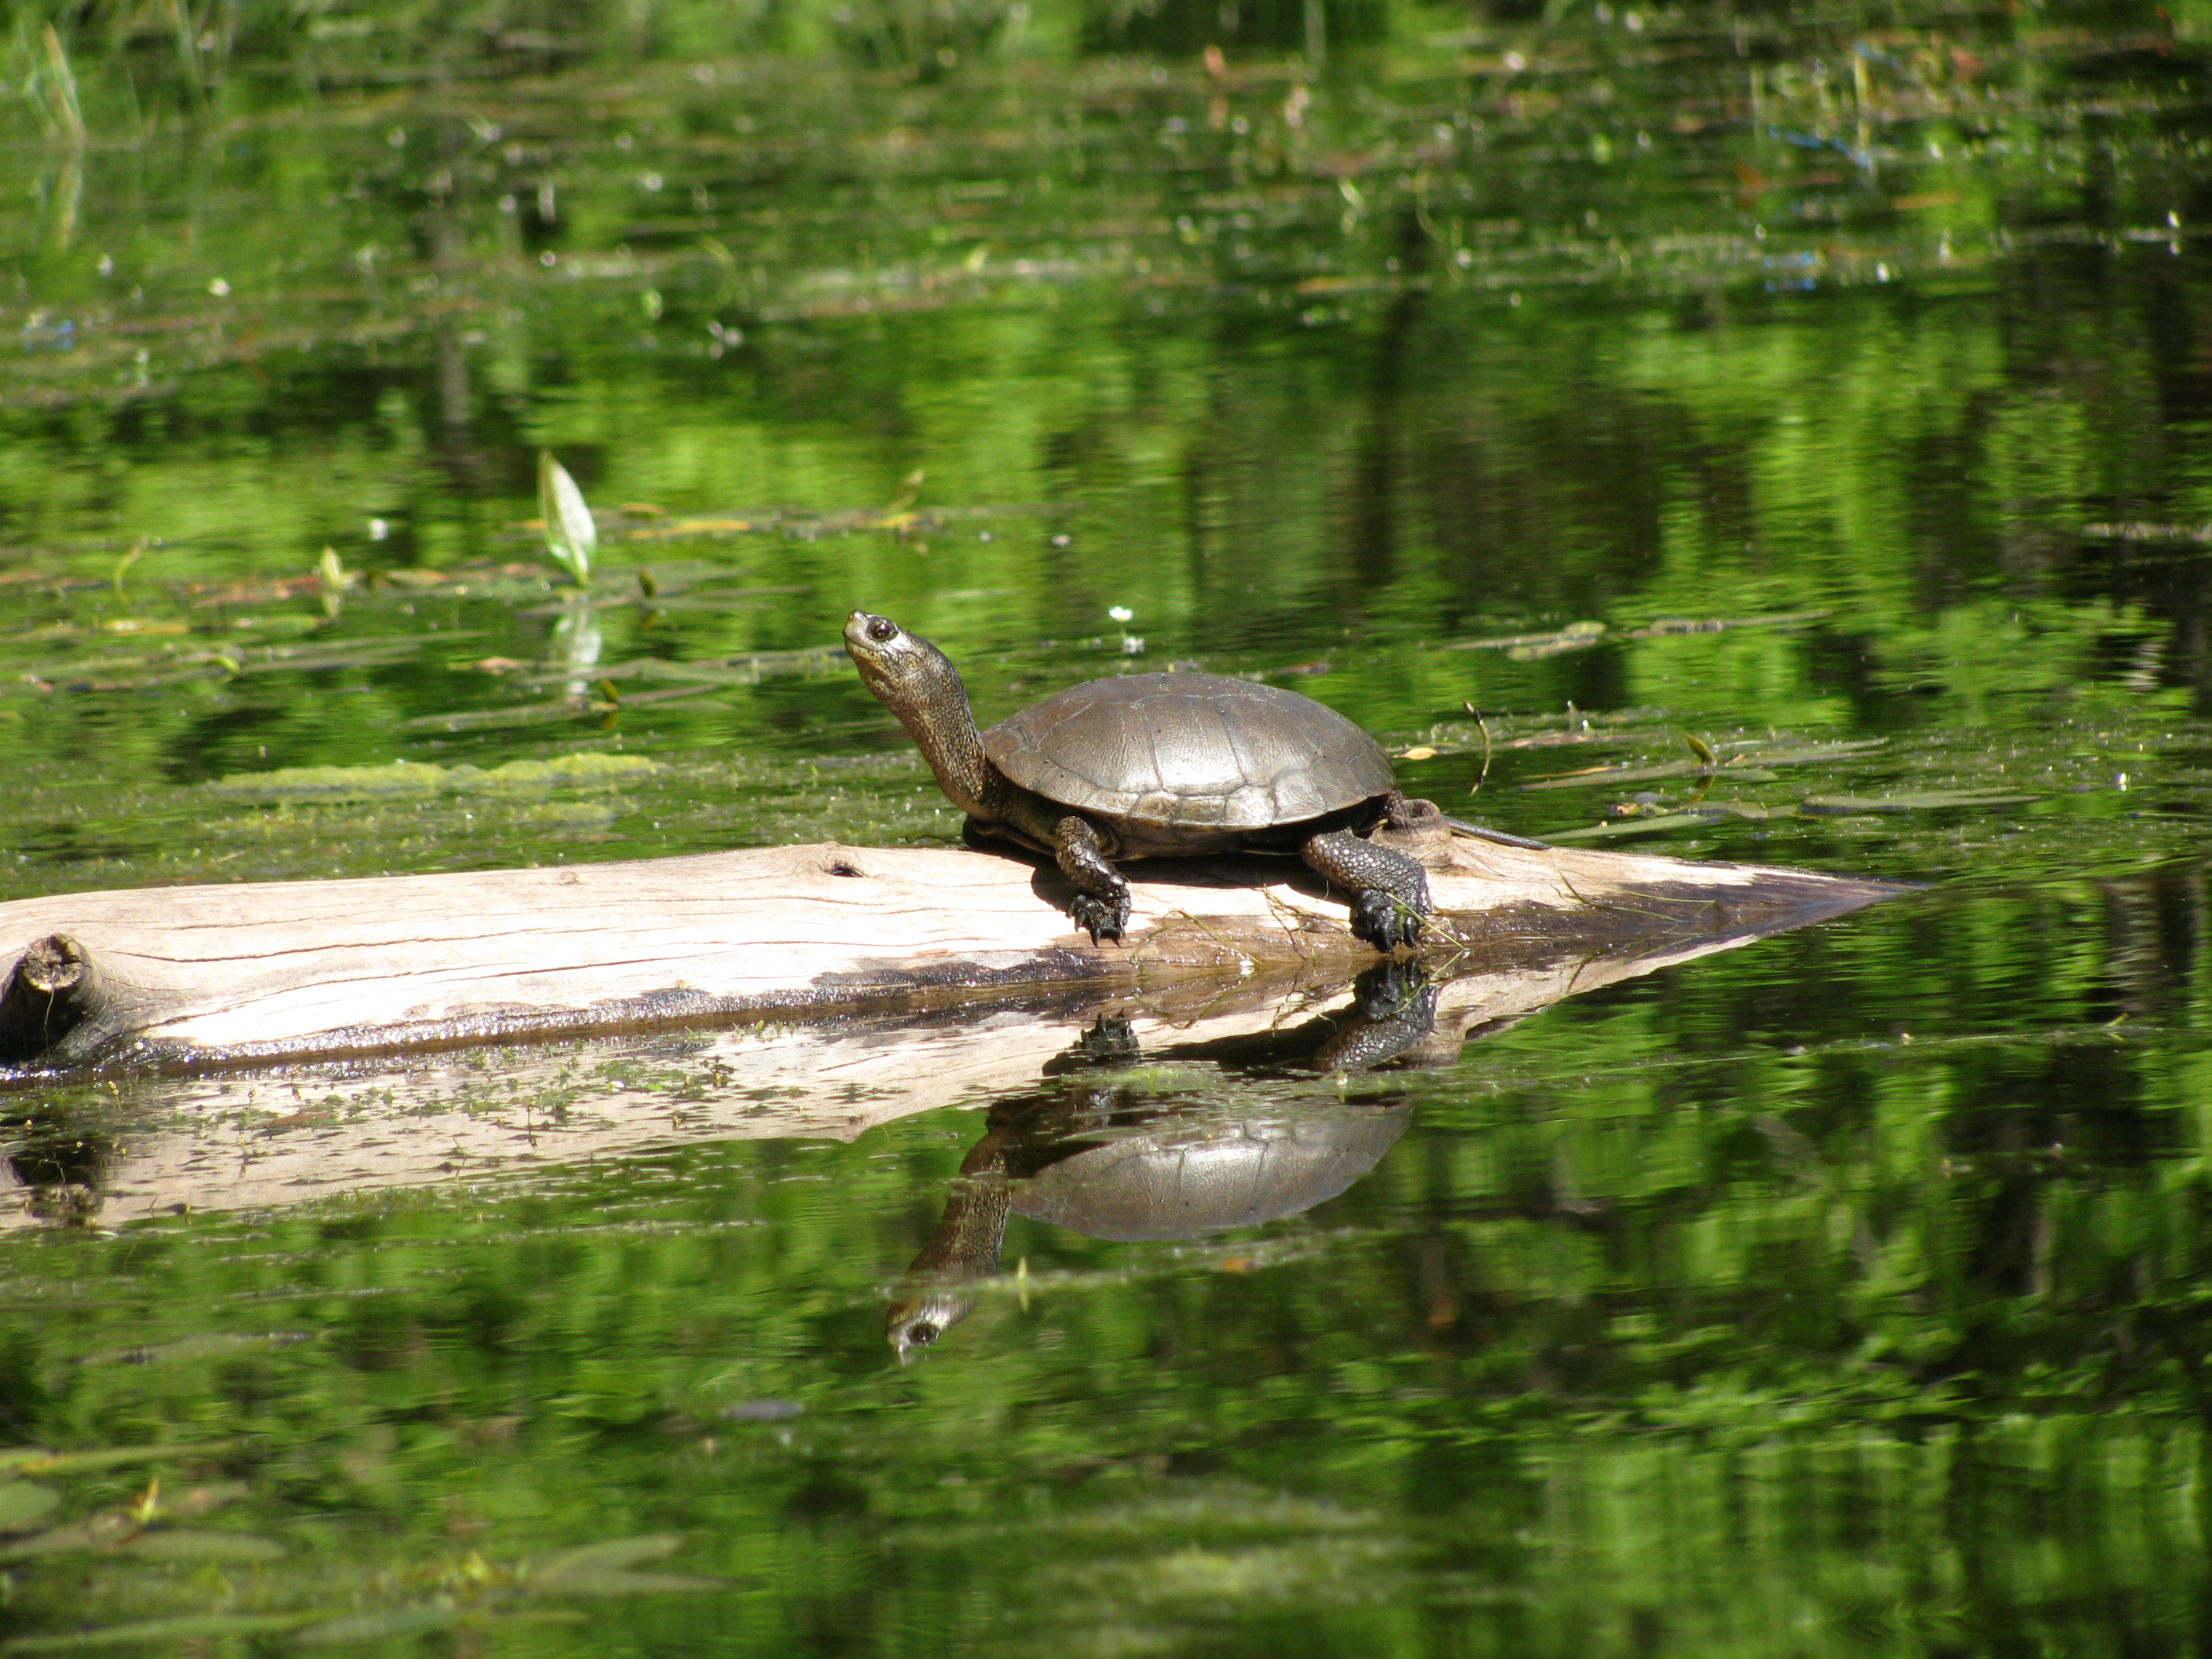 File:Turtle on a log (13547451633).jpg - Wikimedia Commons